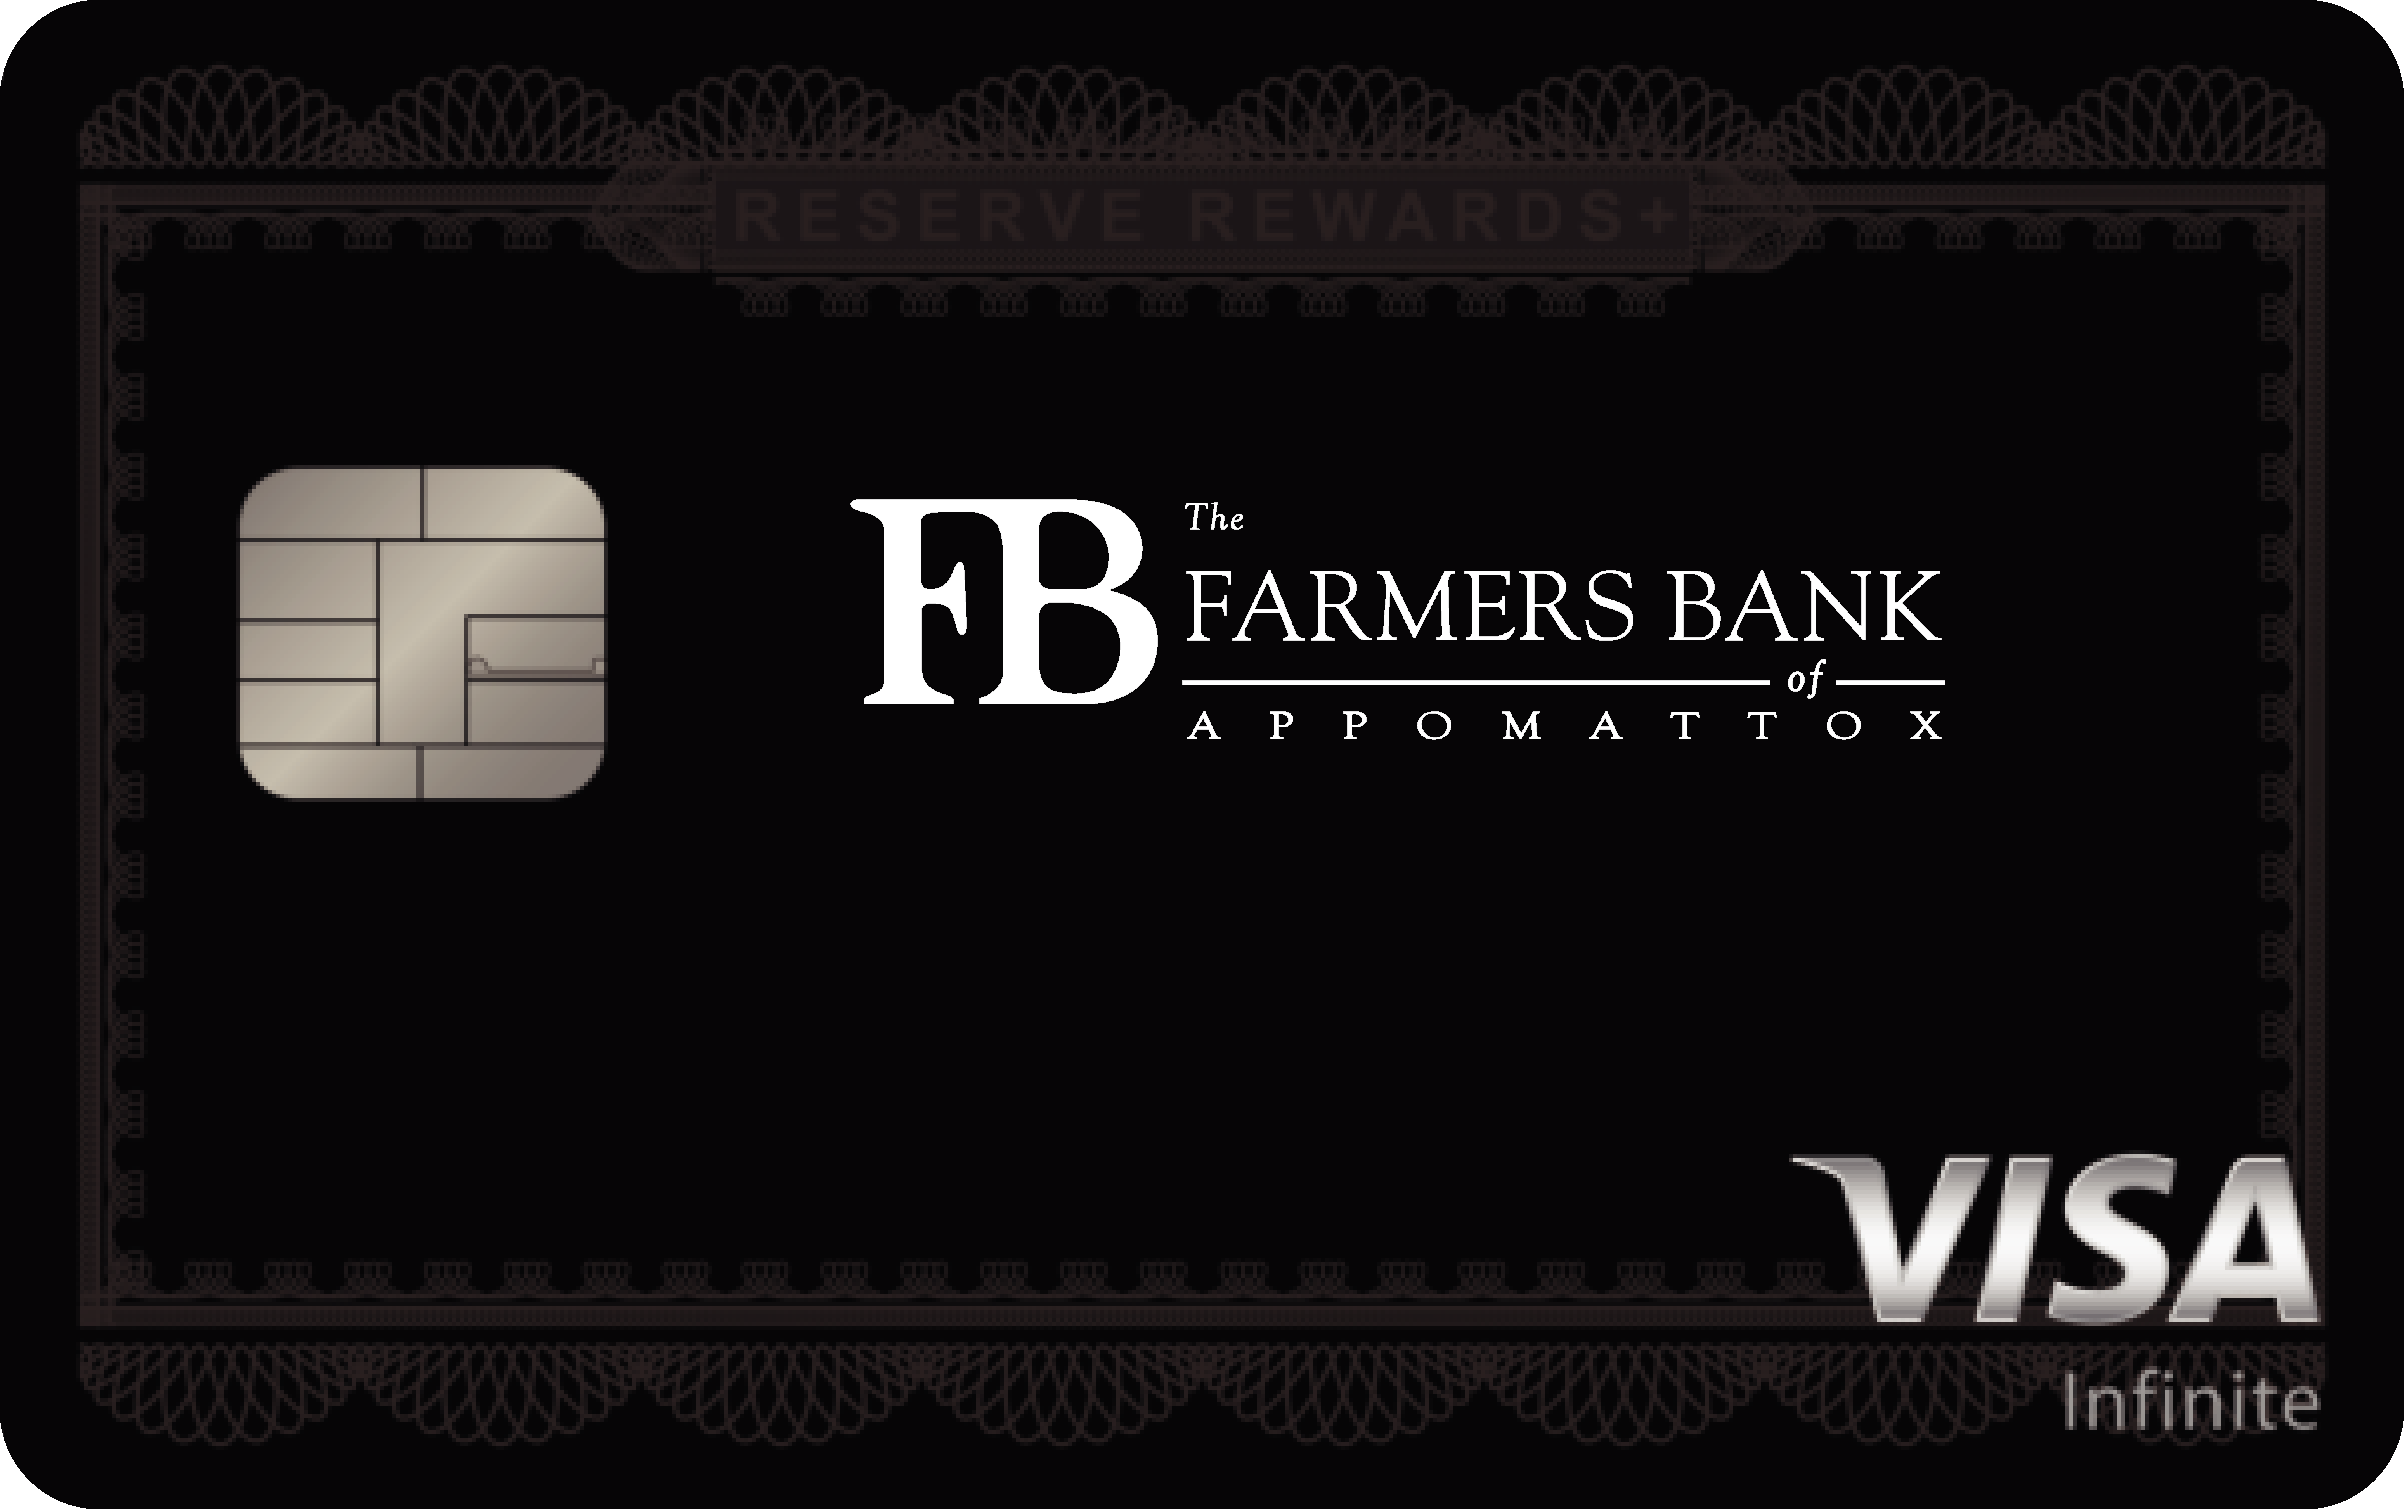 The Farmers Bank of Appomattox